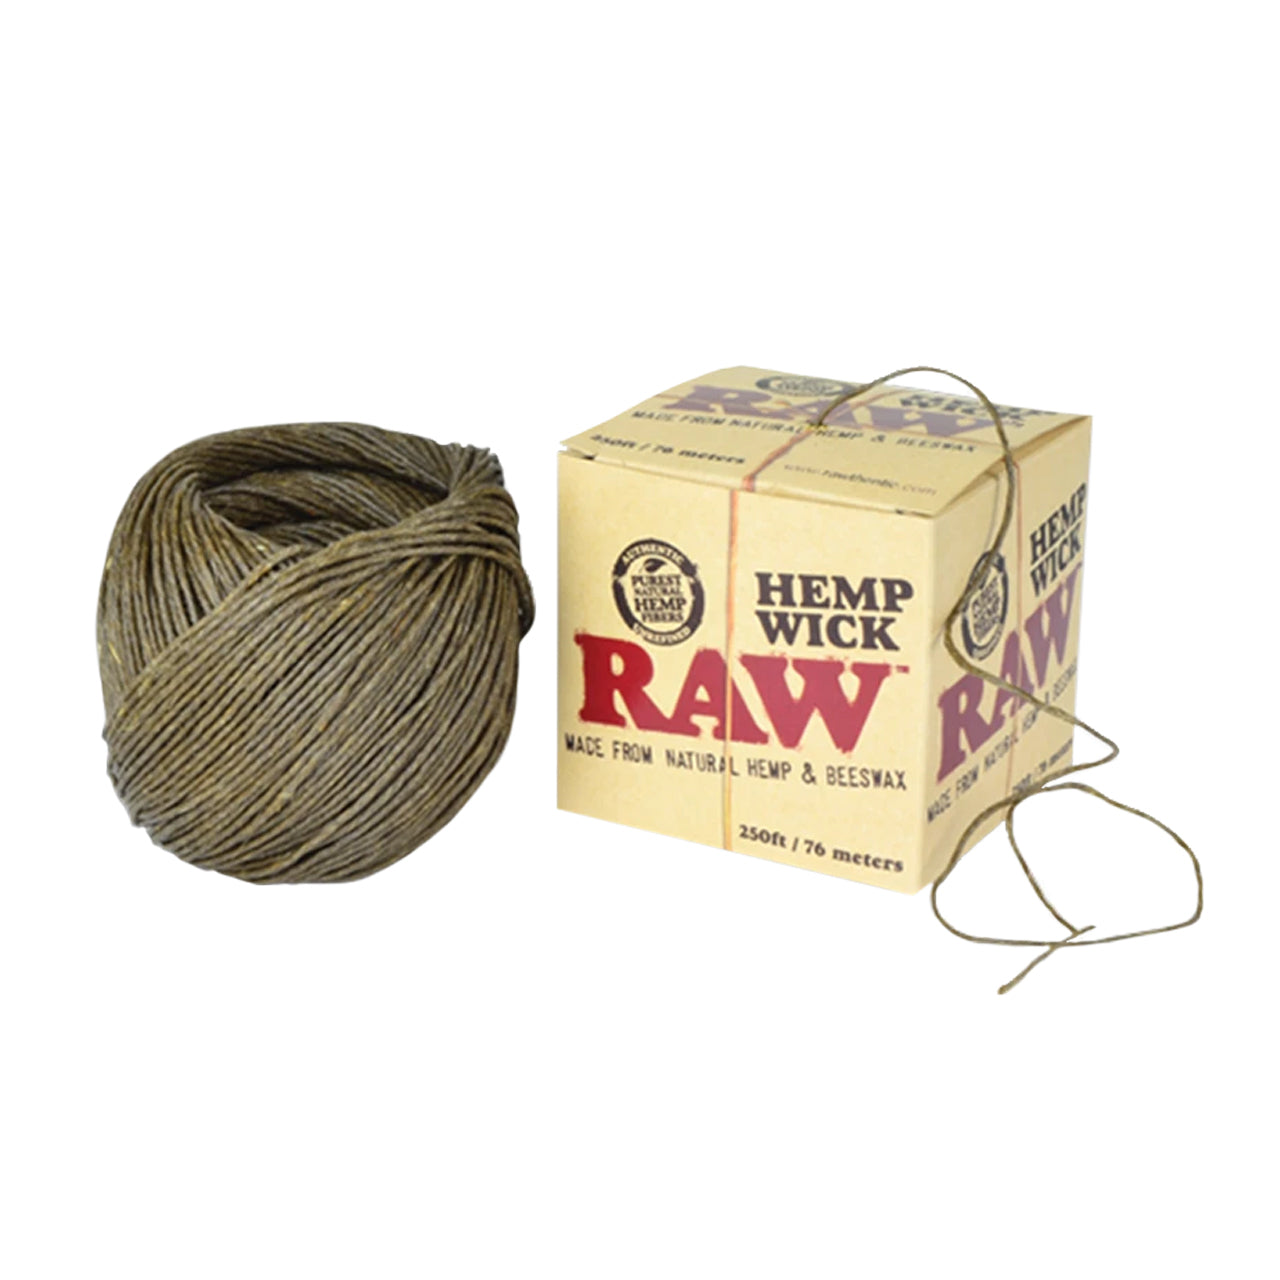 raw hemp wick european edition 250 ft